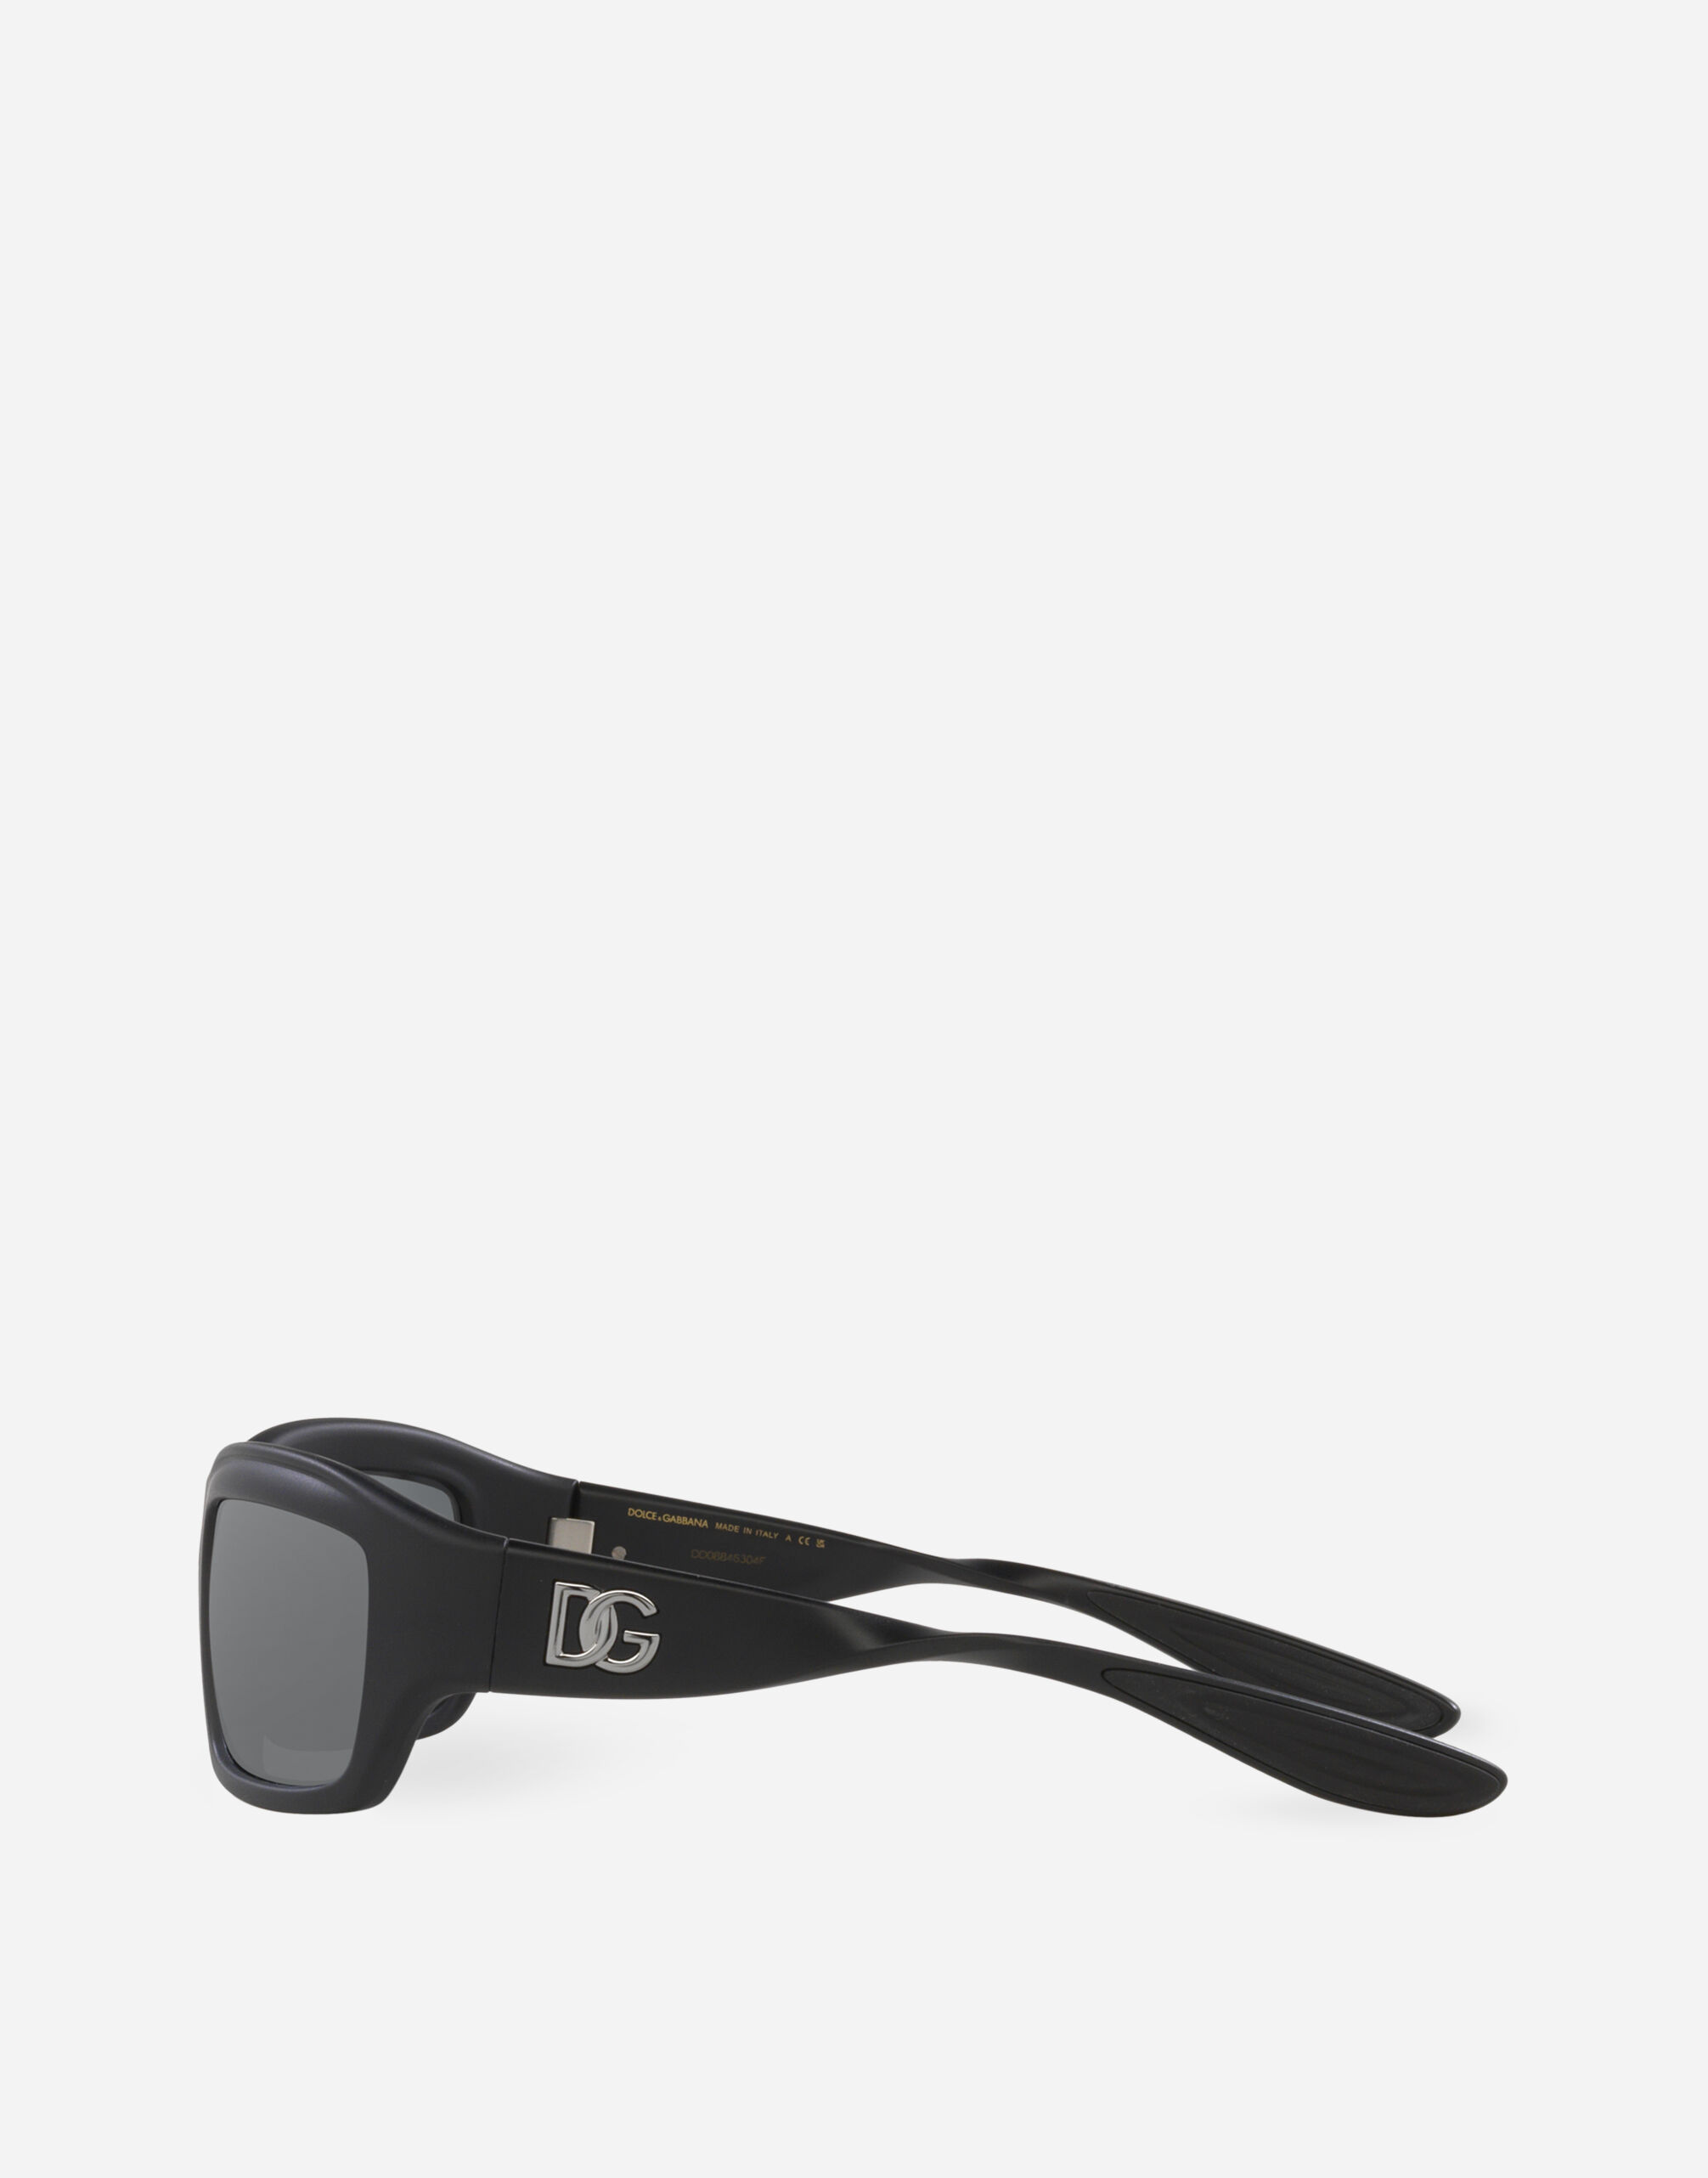 DG Toy sunglasses in Black for | Dolce&Gabbana® US